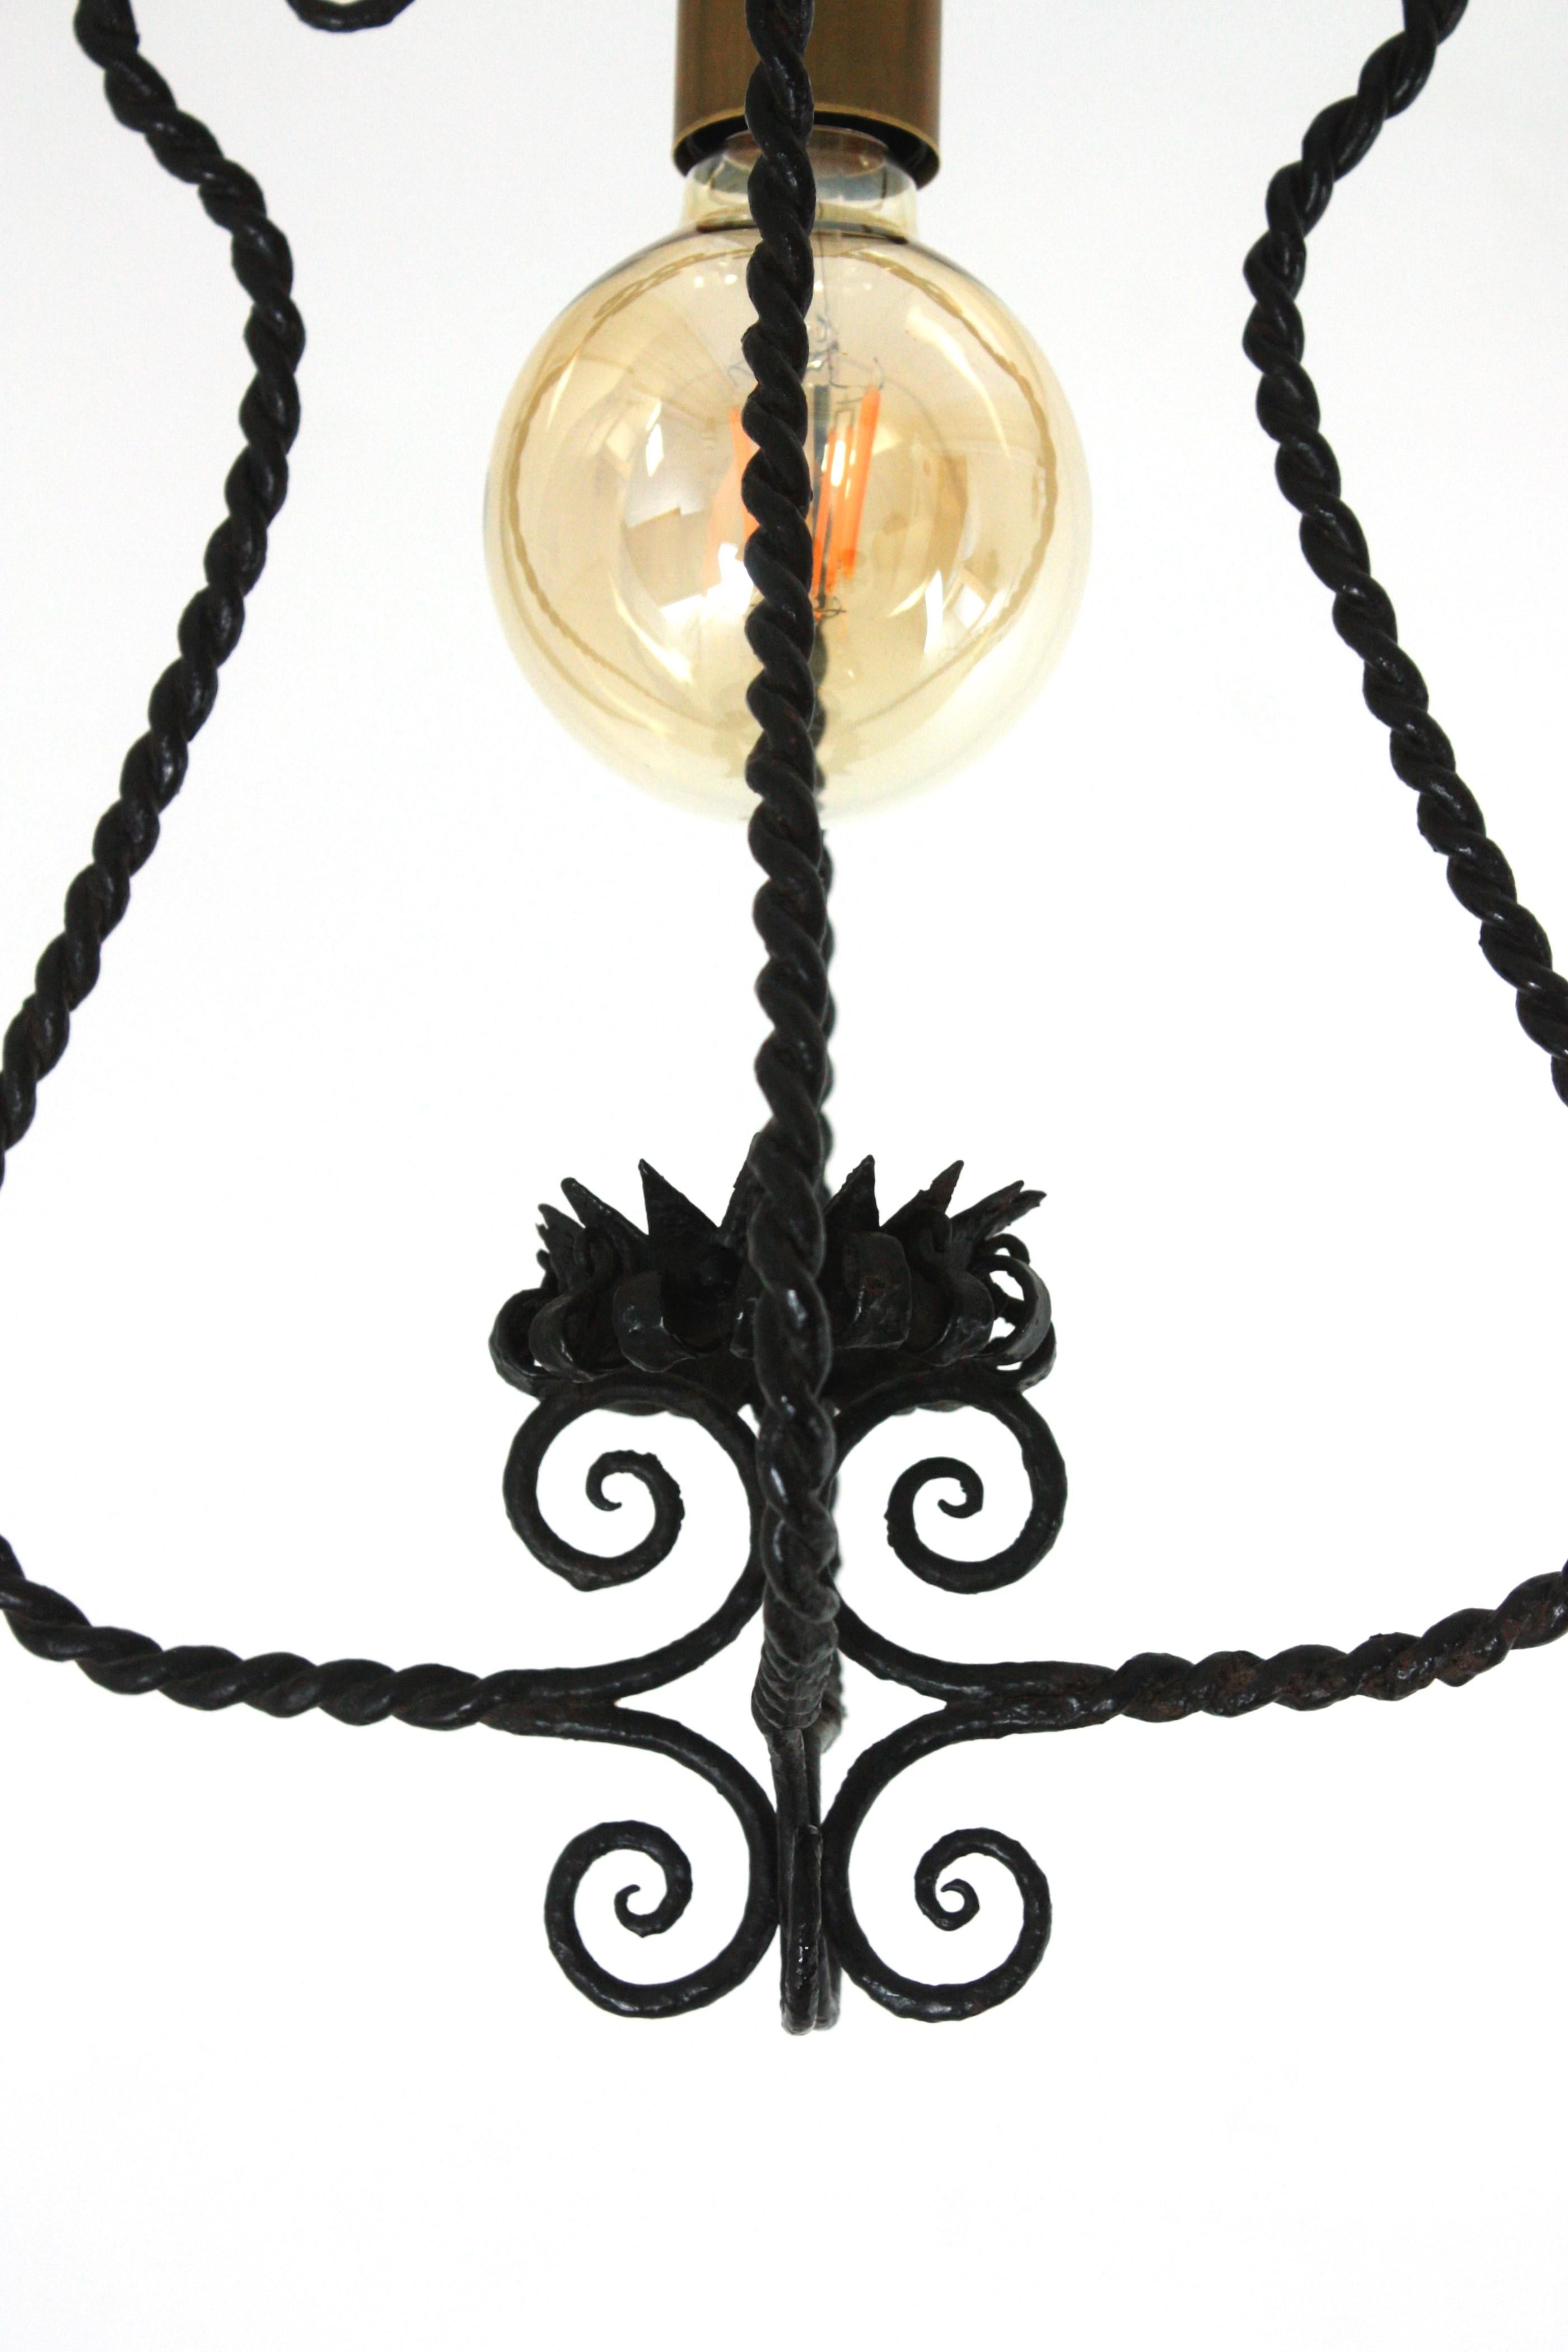 20th Century Spanish Lantern Pendant Lamp in Wrought Iron, Scroll Twisting Design, 1940s For Sale